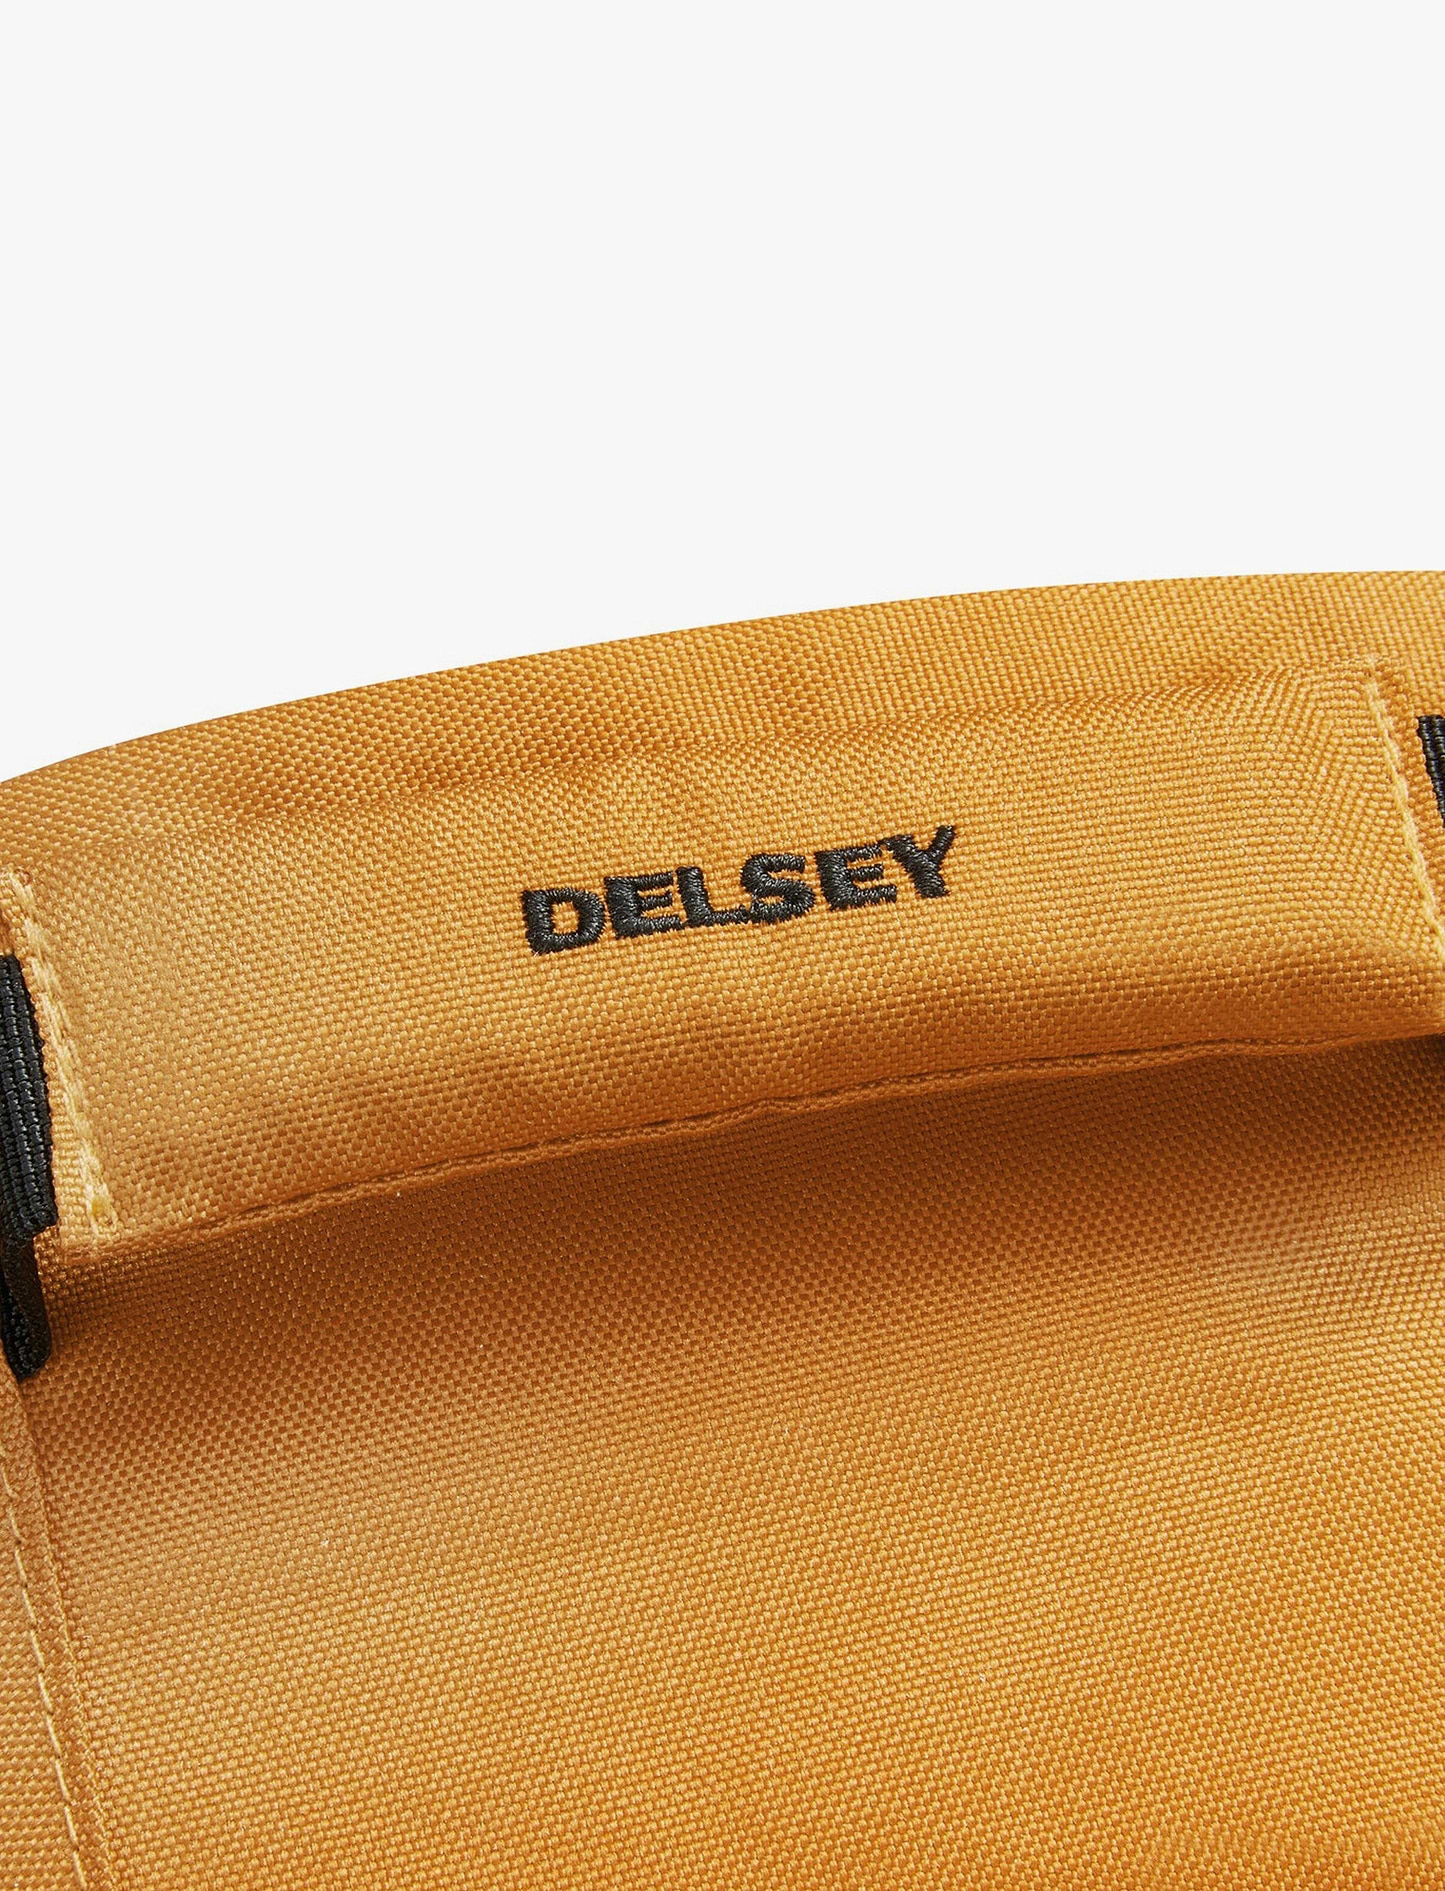 Delsey Securban - תיק גב דלסי למחשב נייד '15.6 בצבע צהוב